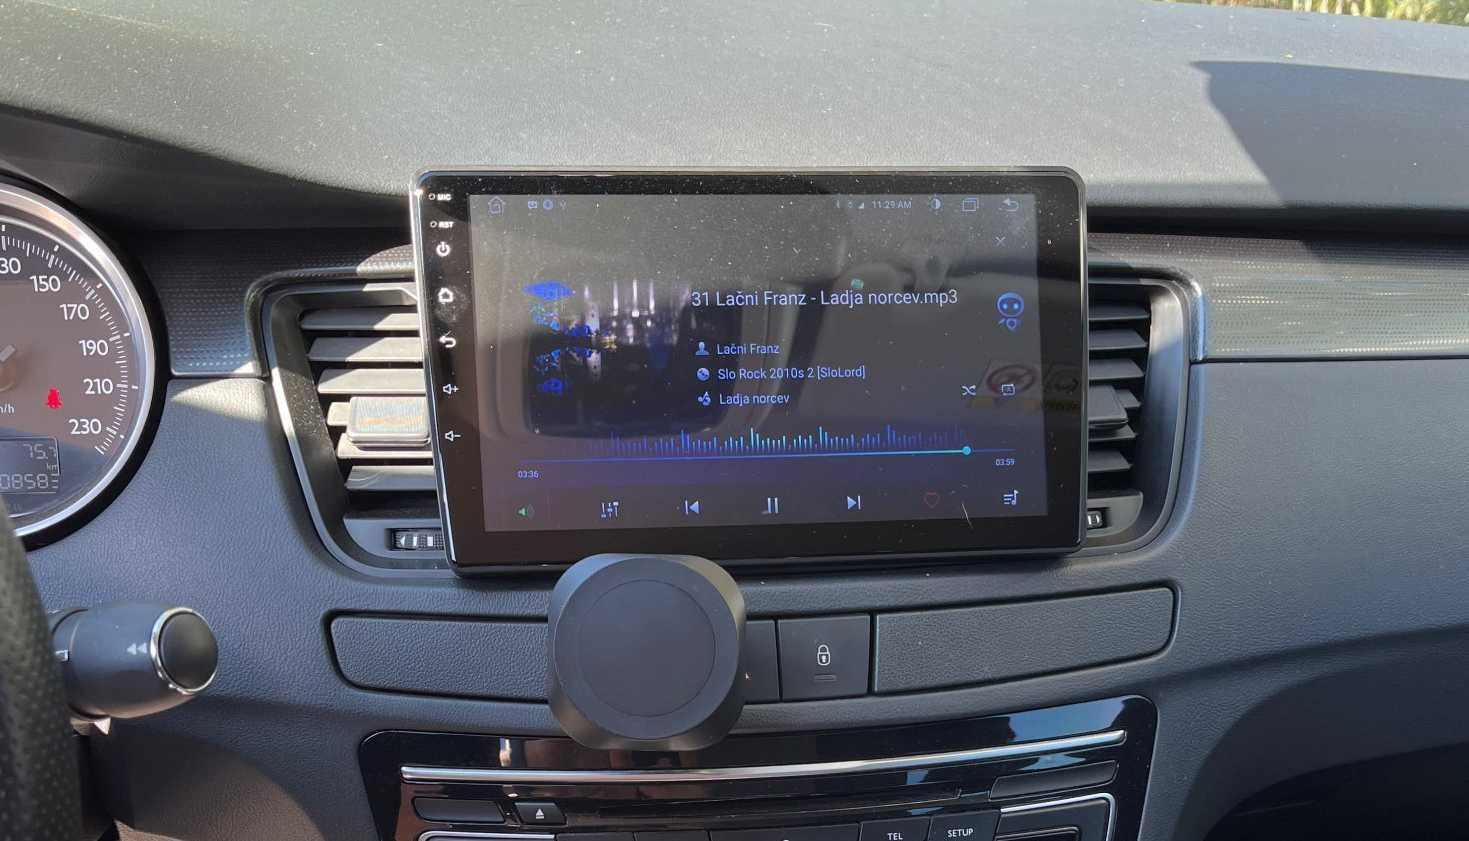 Rádio 2DIN 9" [4+32GB] • Peugeot 508 (De 2010 a 2018) • Android GPS